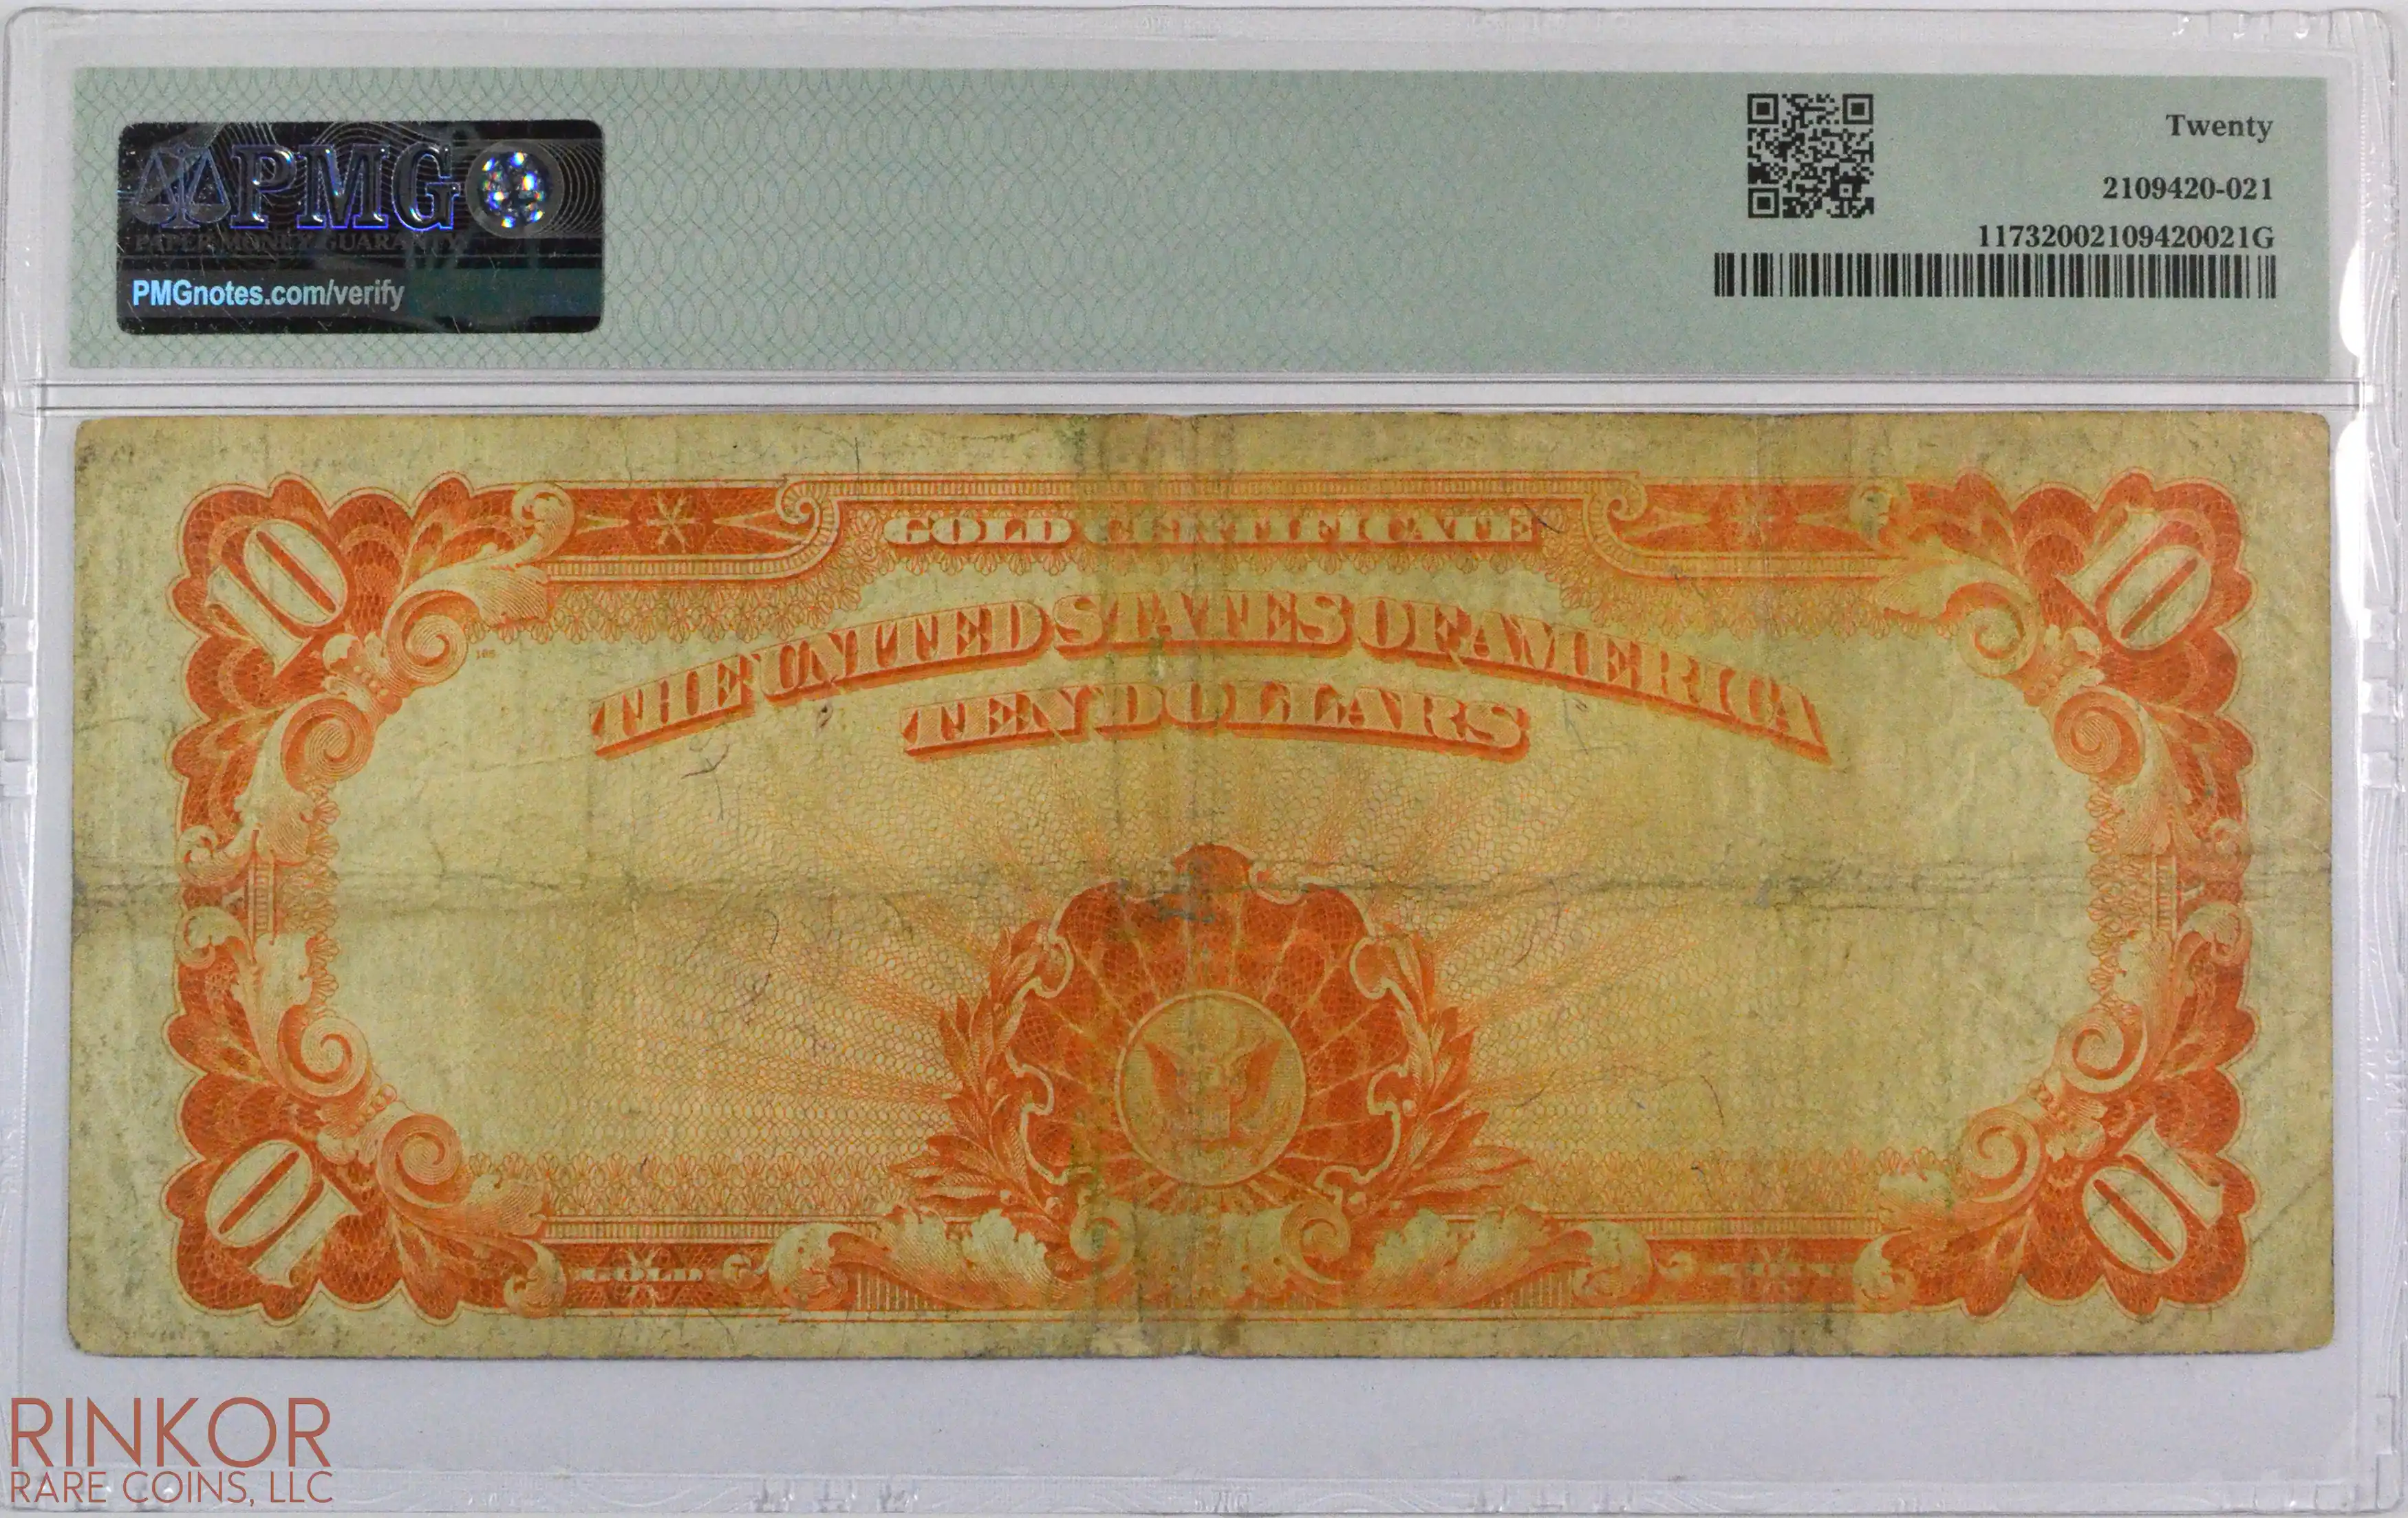 1922 $10 Fr. 1173 Gold Certificate PMG VF-20